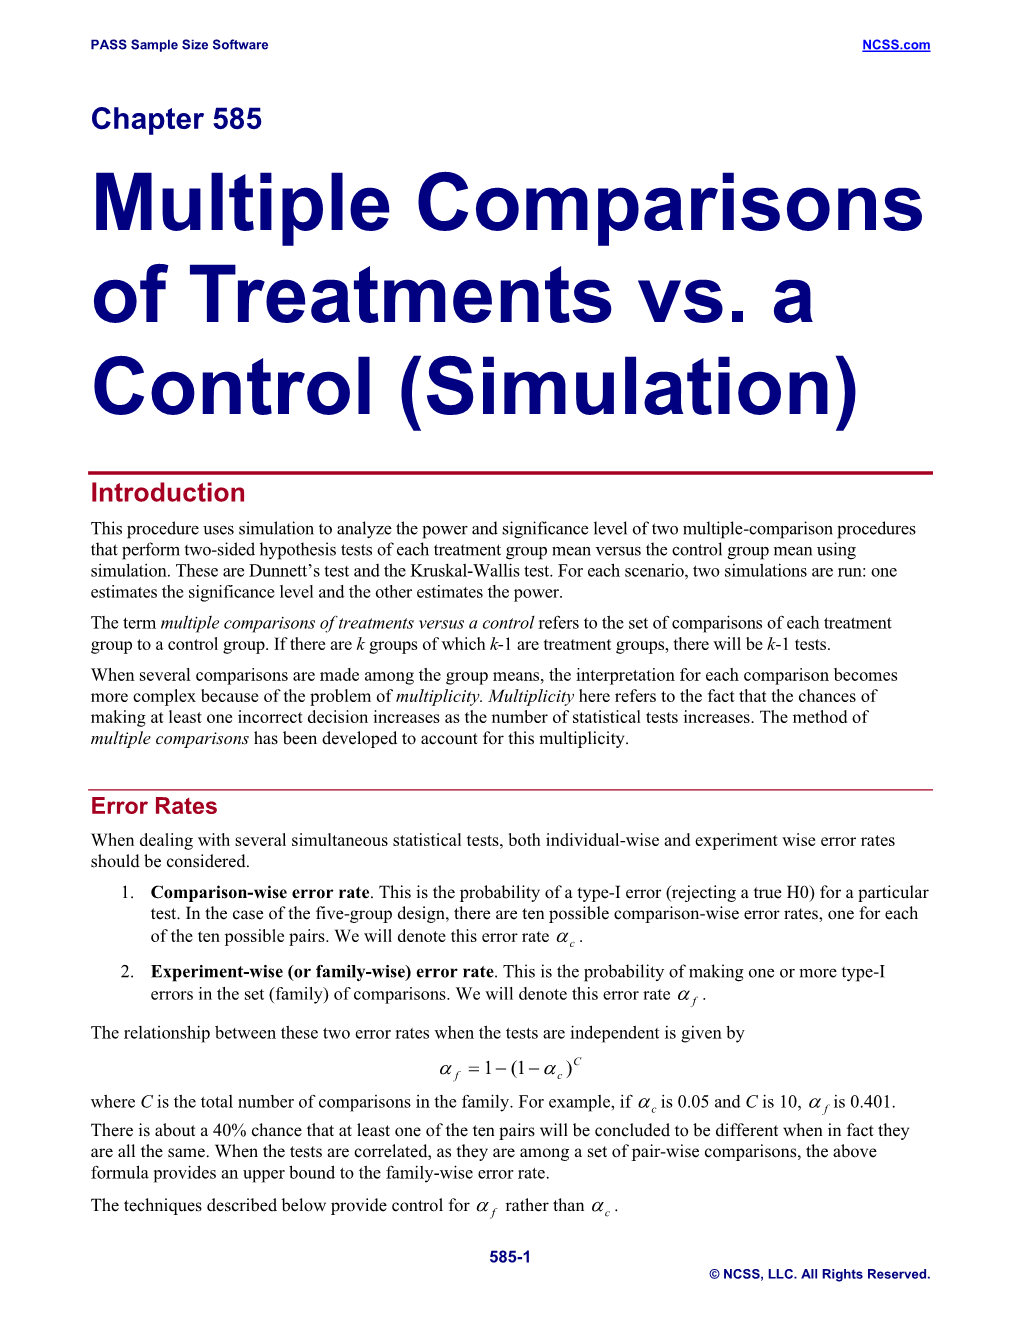 Multiple Comparisons of Treatments Vs. a Control (Simulation)